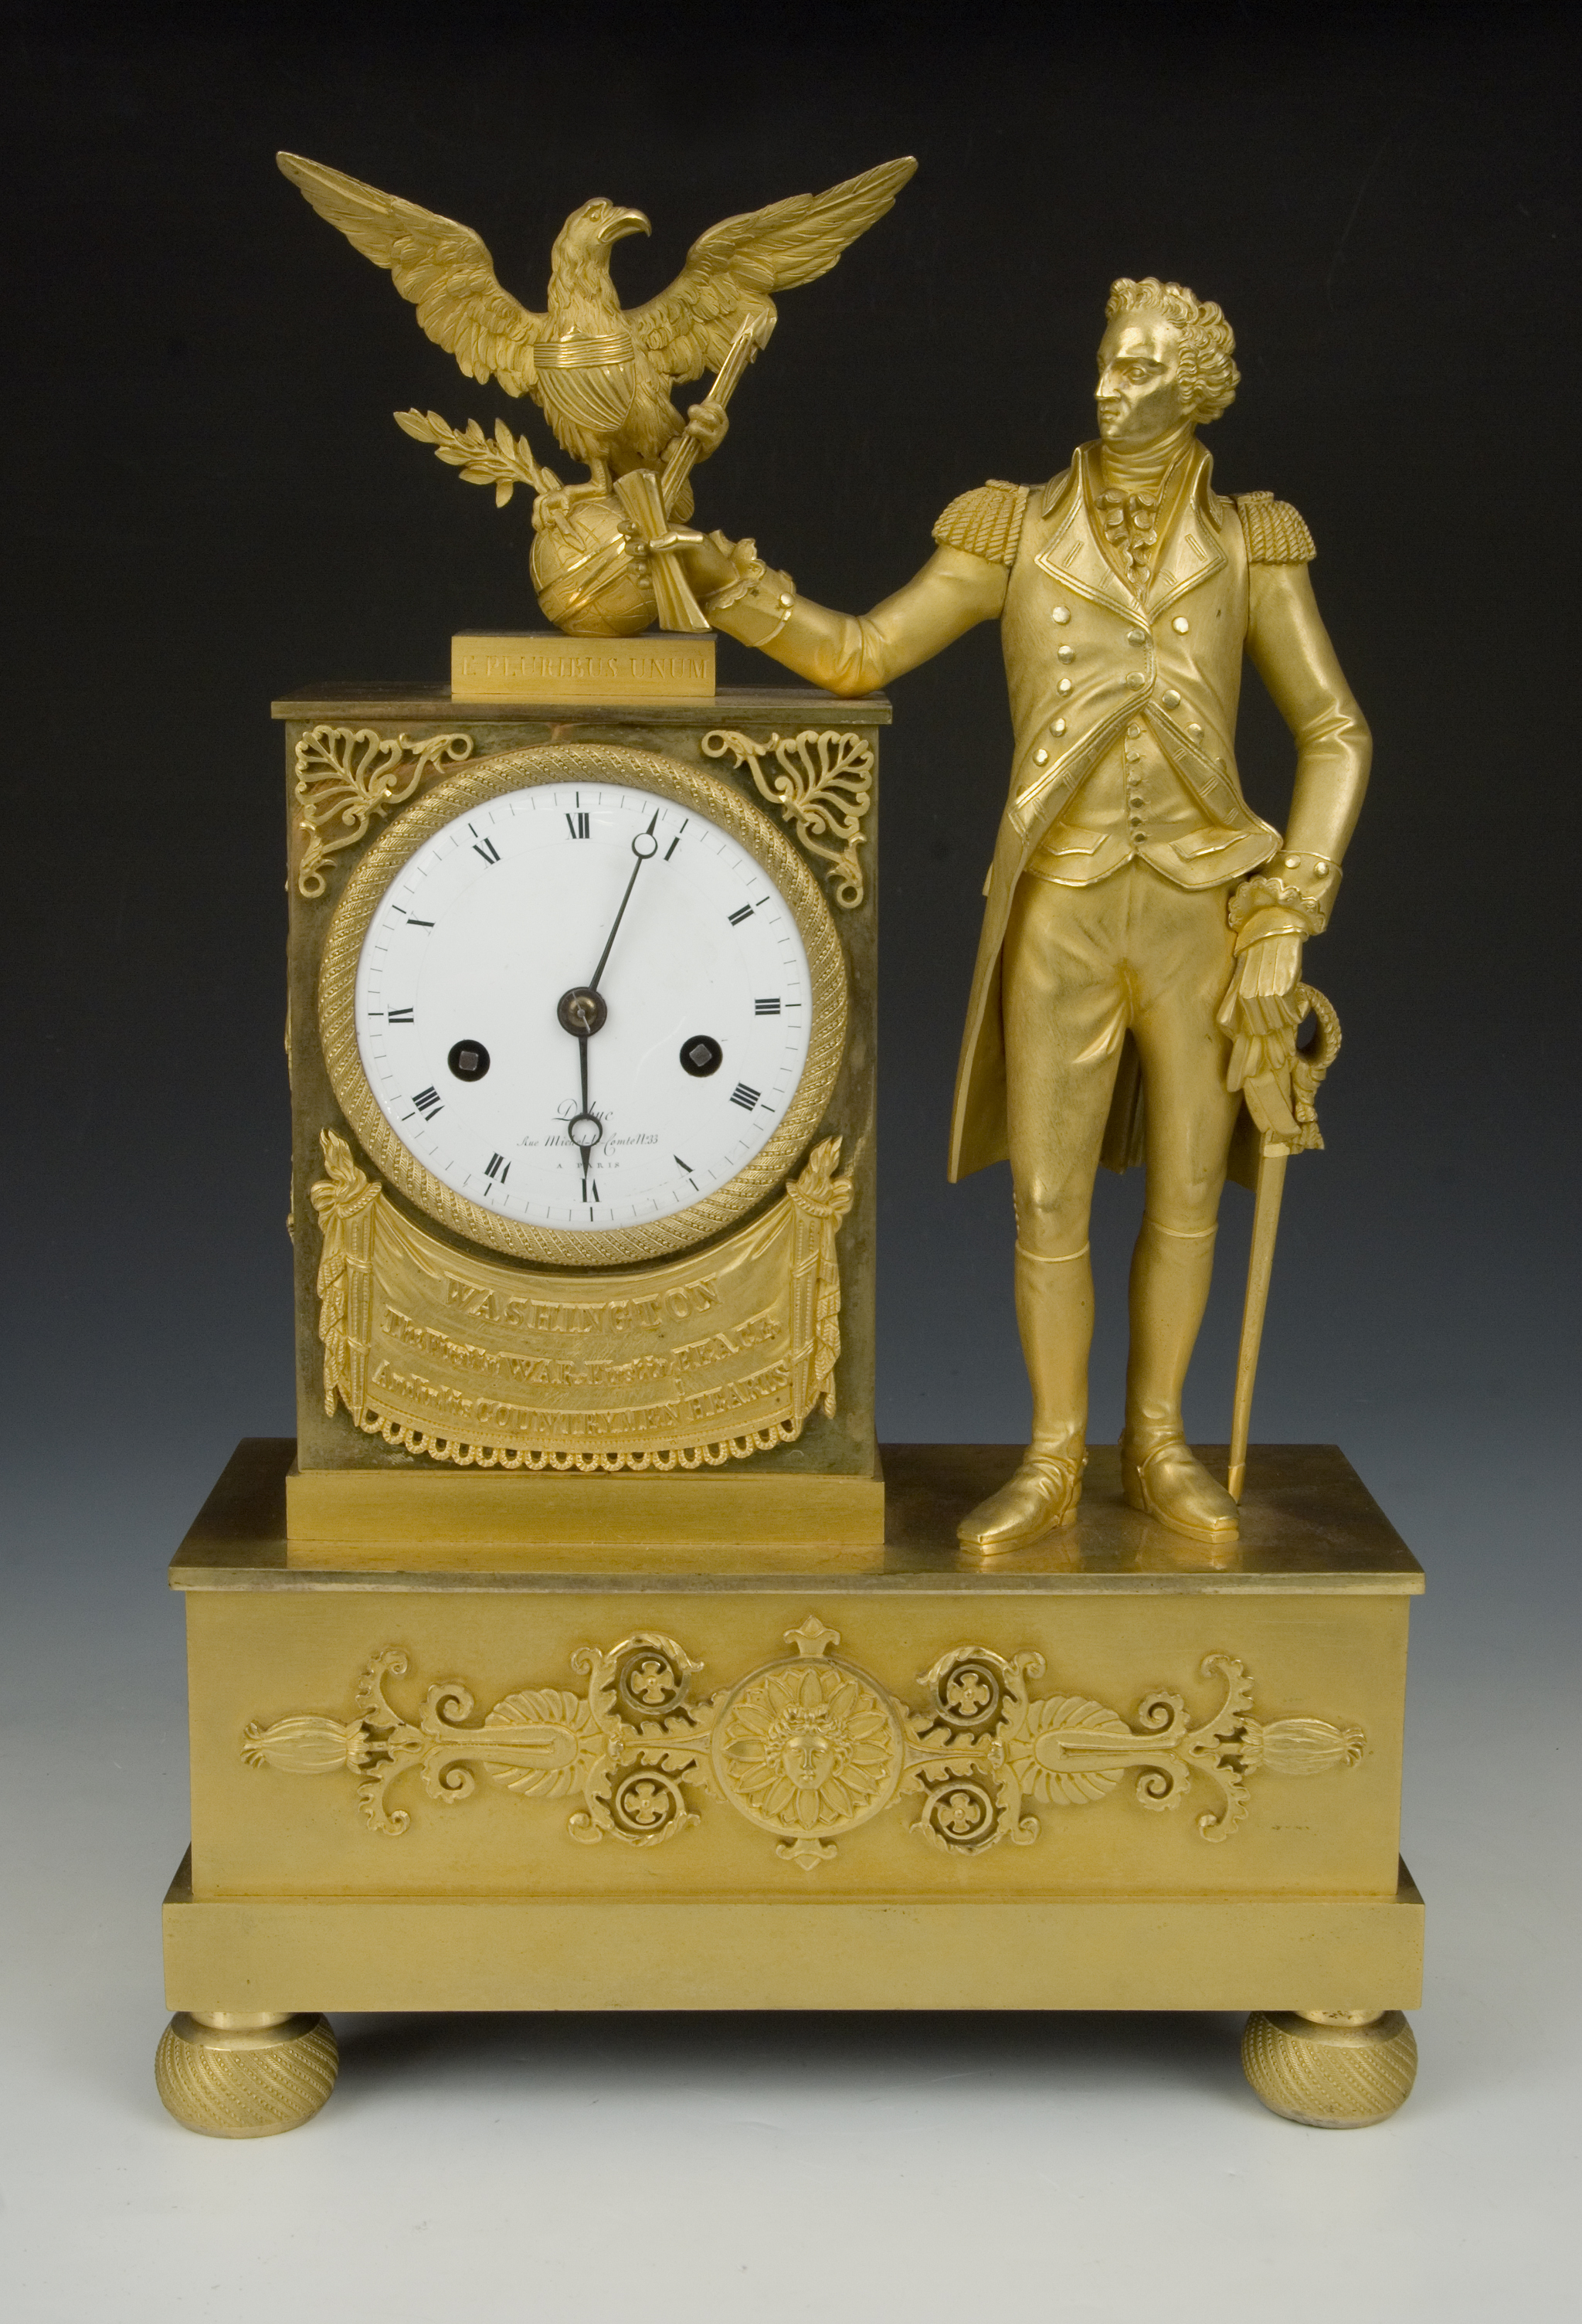 George Washington mantel clock by DuBuc, ca. 1800-1810